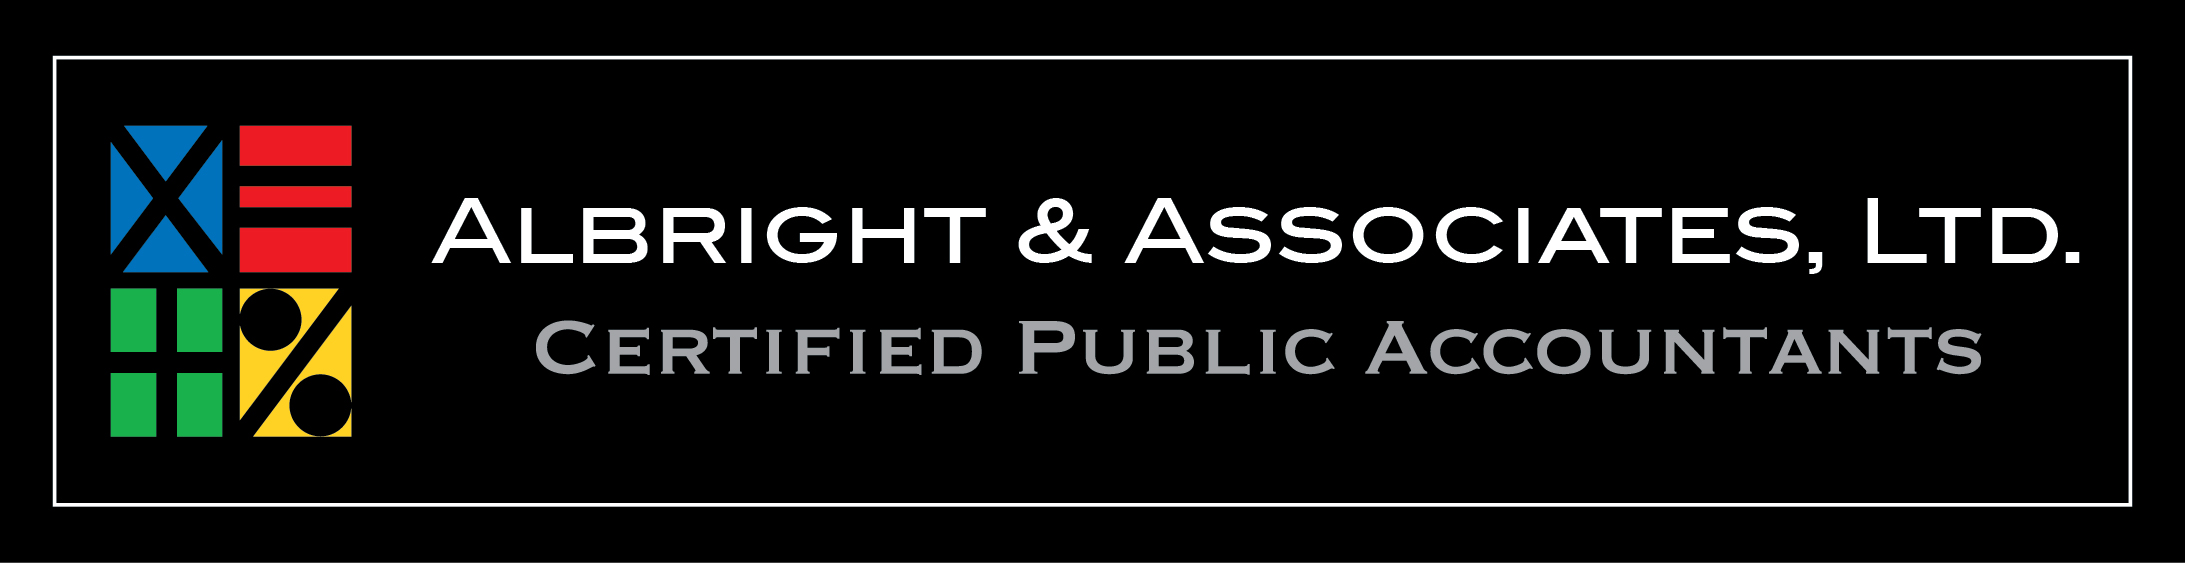 Albright and Associates, LTD logo